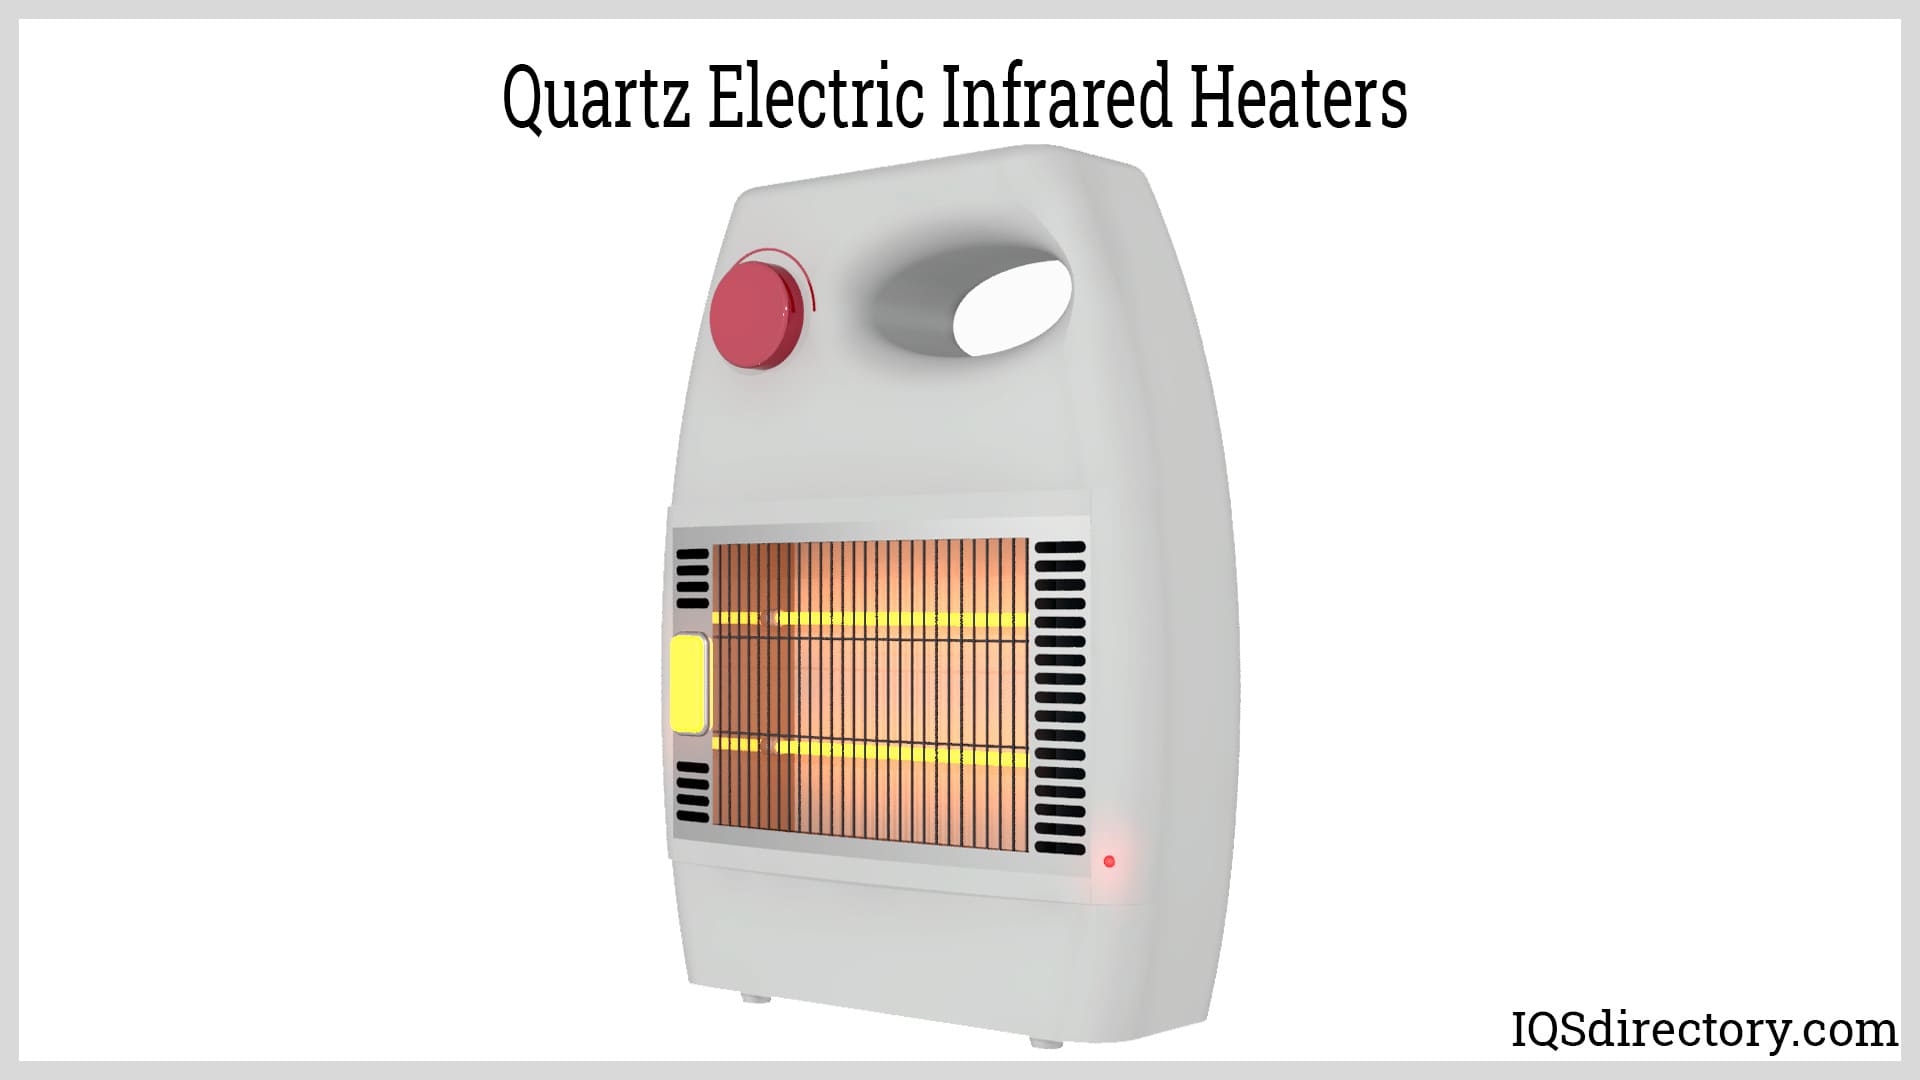 Quartz Electric Infrared Heaters